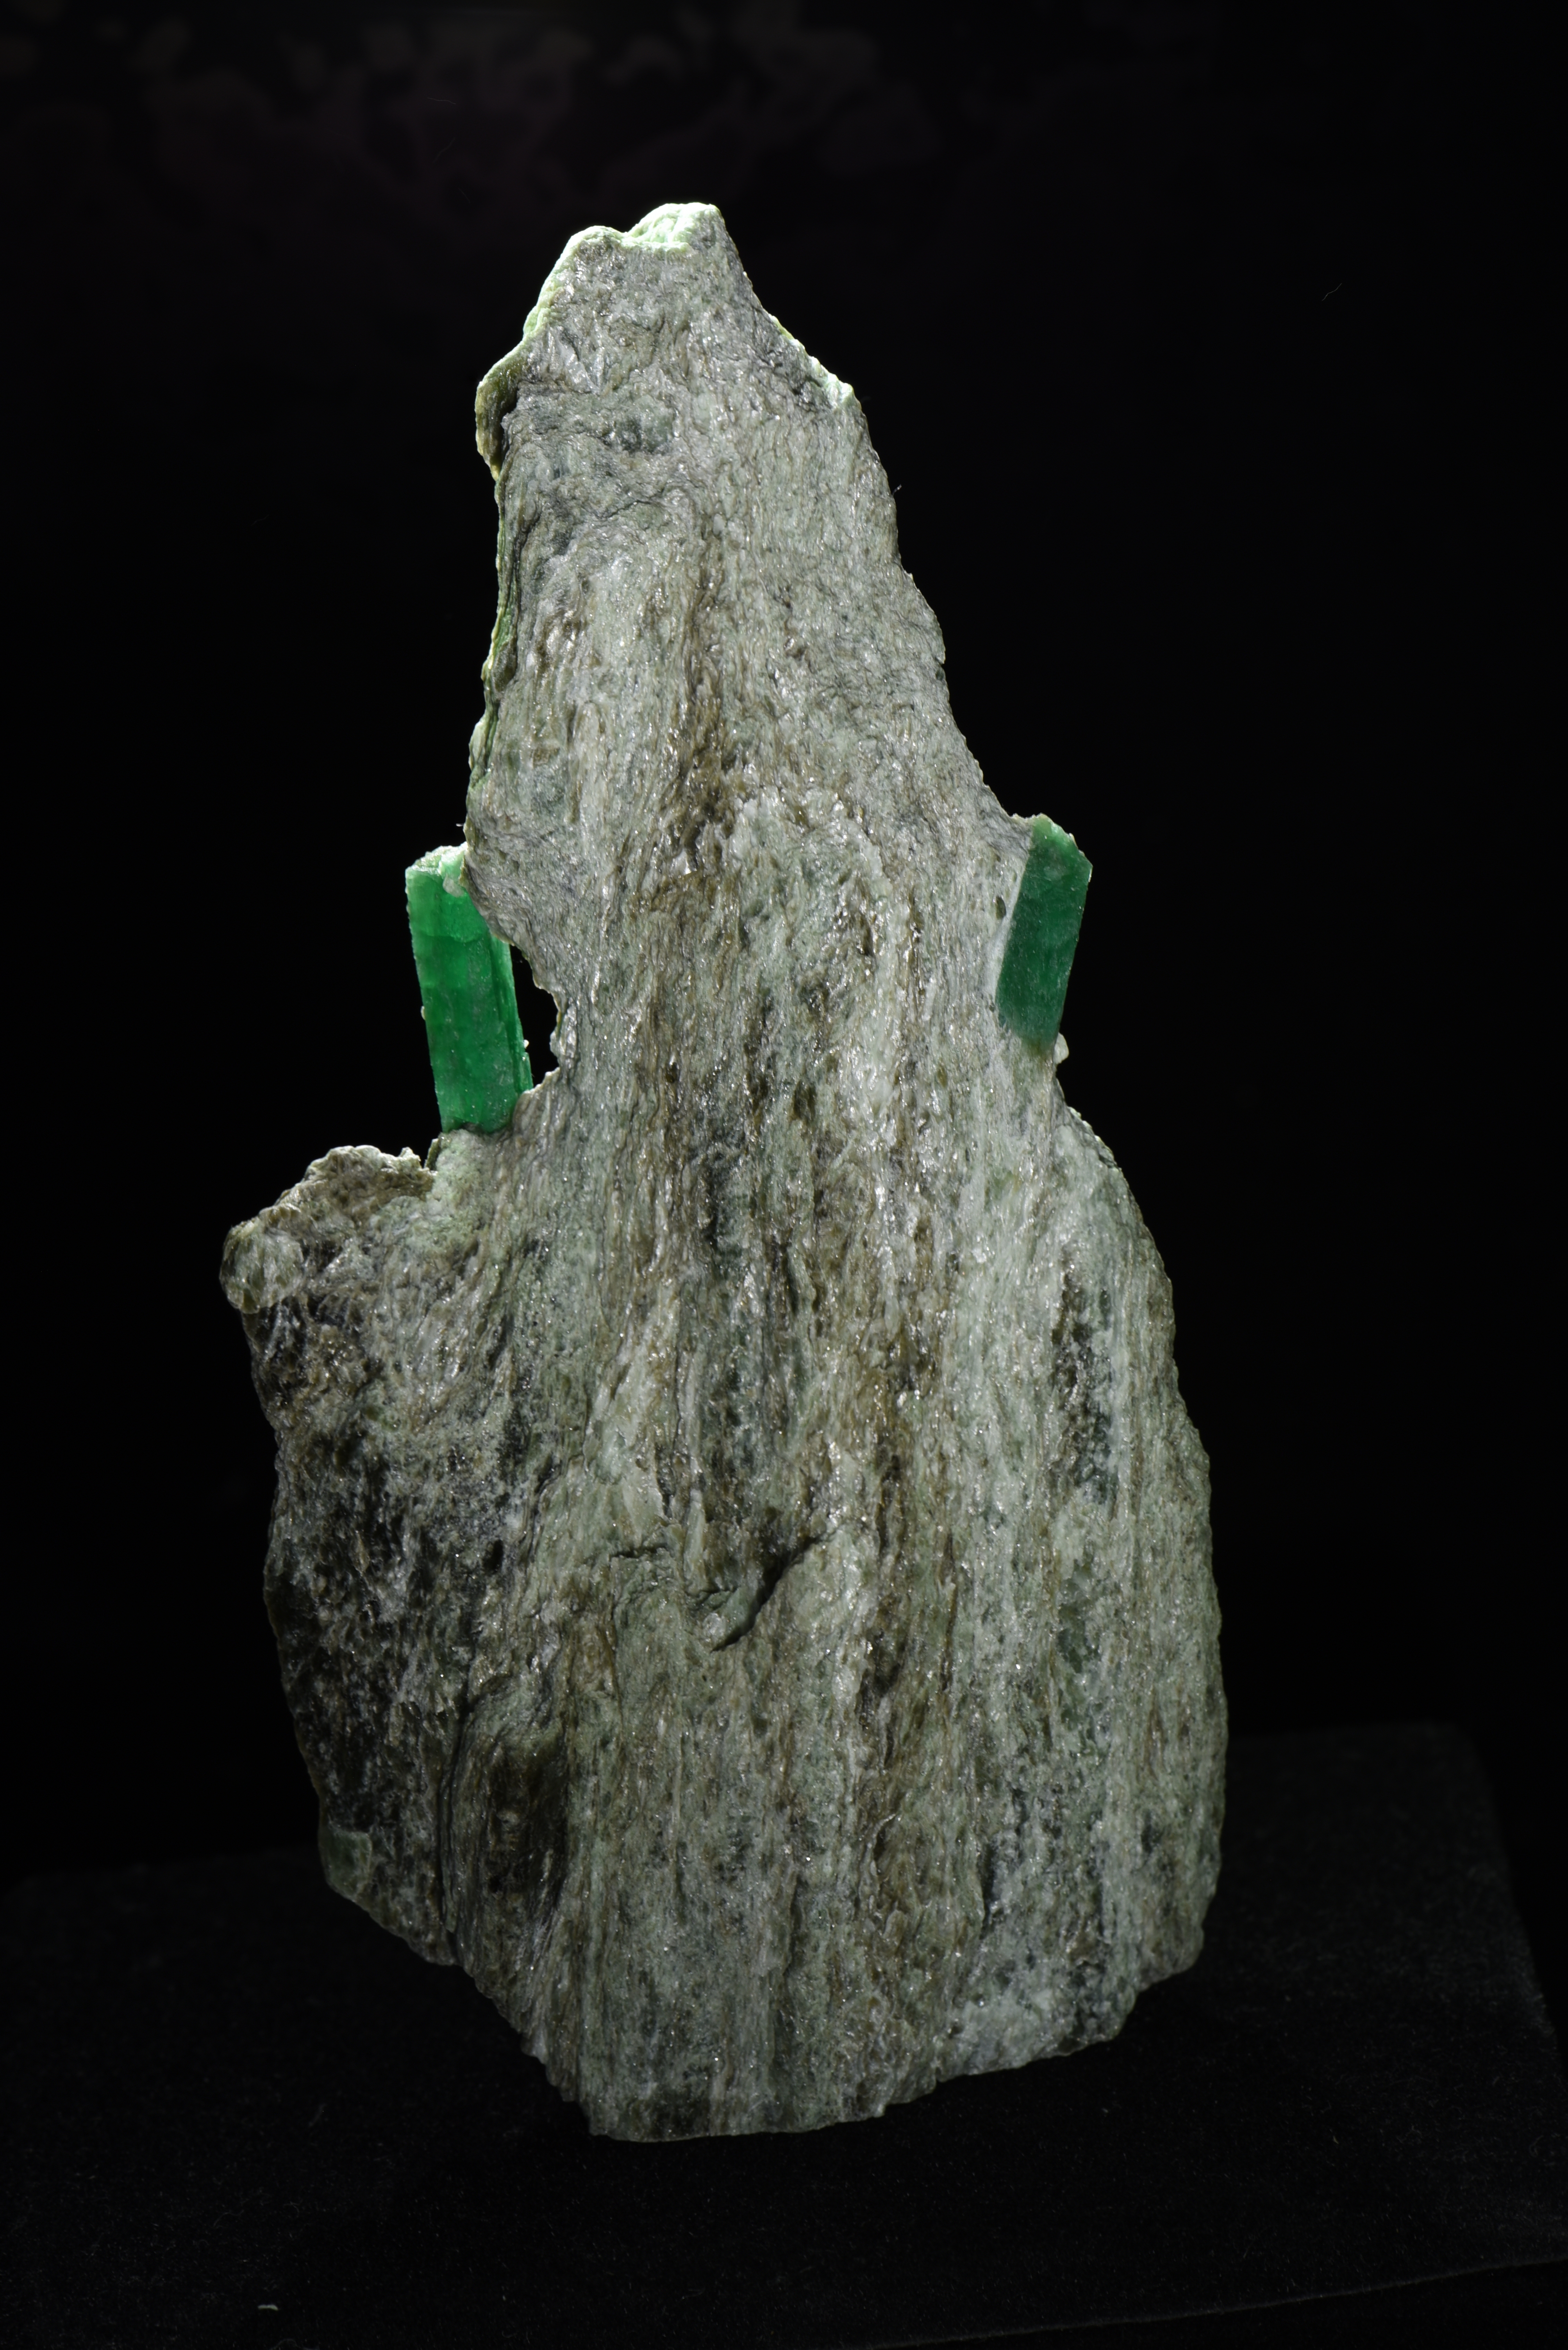     Smaragdstufe mit freistehendem Kristall